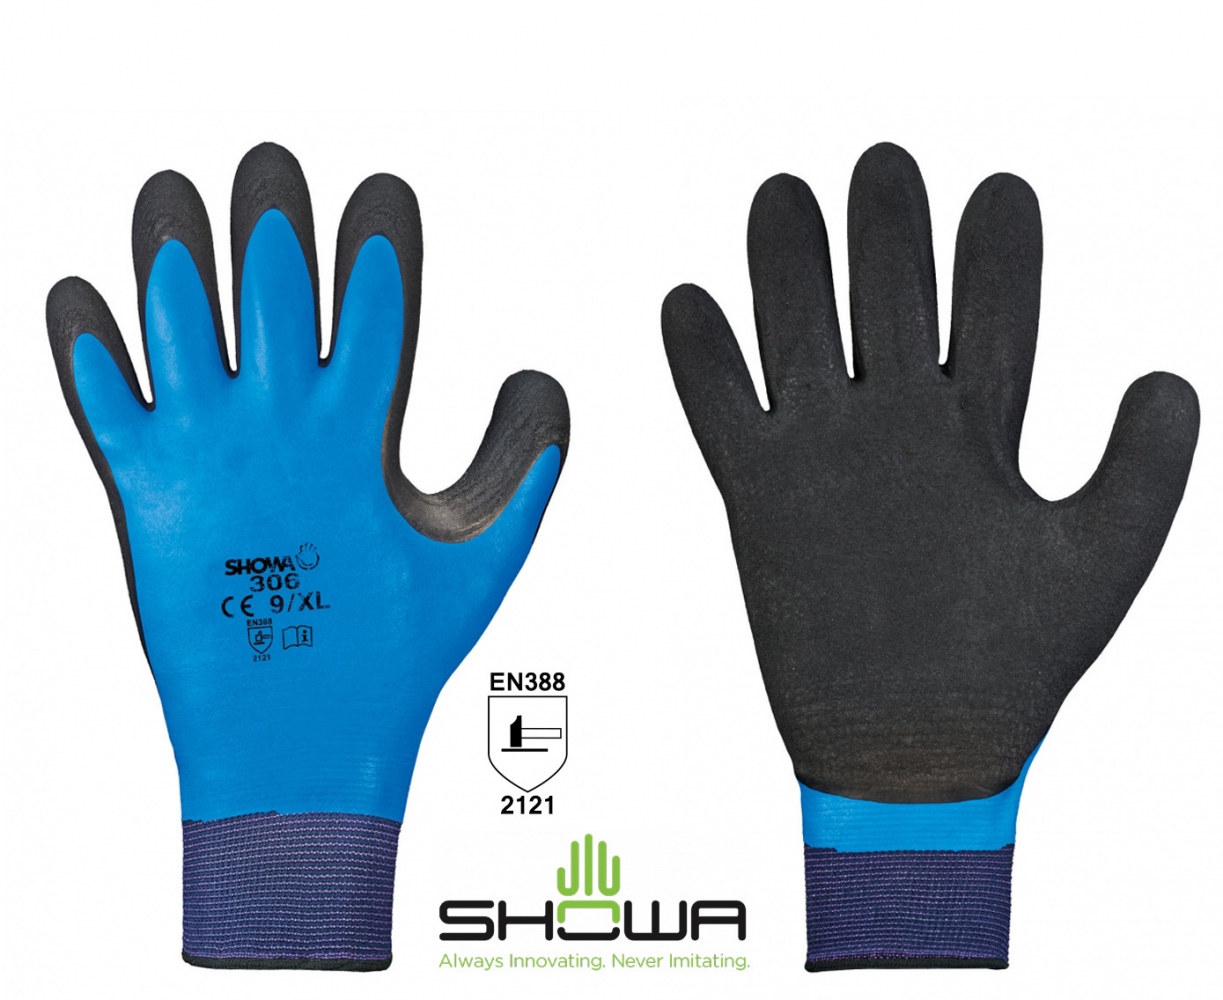 pics/Feldtmann 2016/Handschutz/showa-306-latex-safety-gloves.jpg